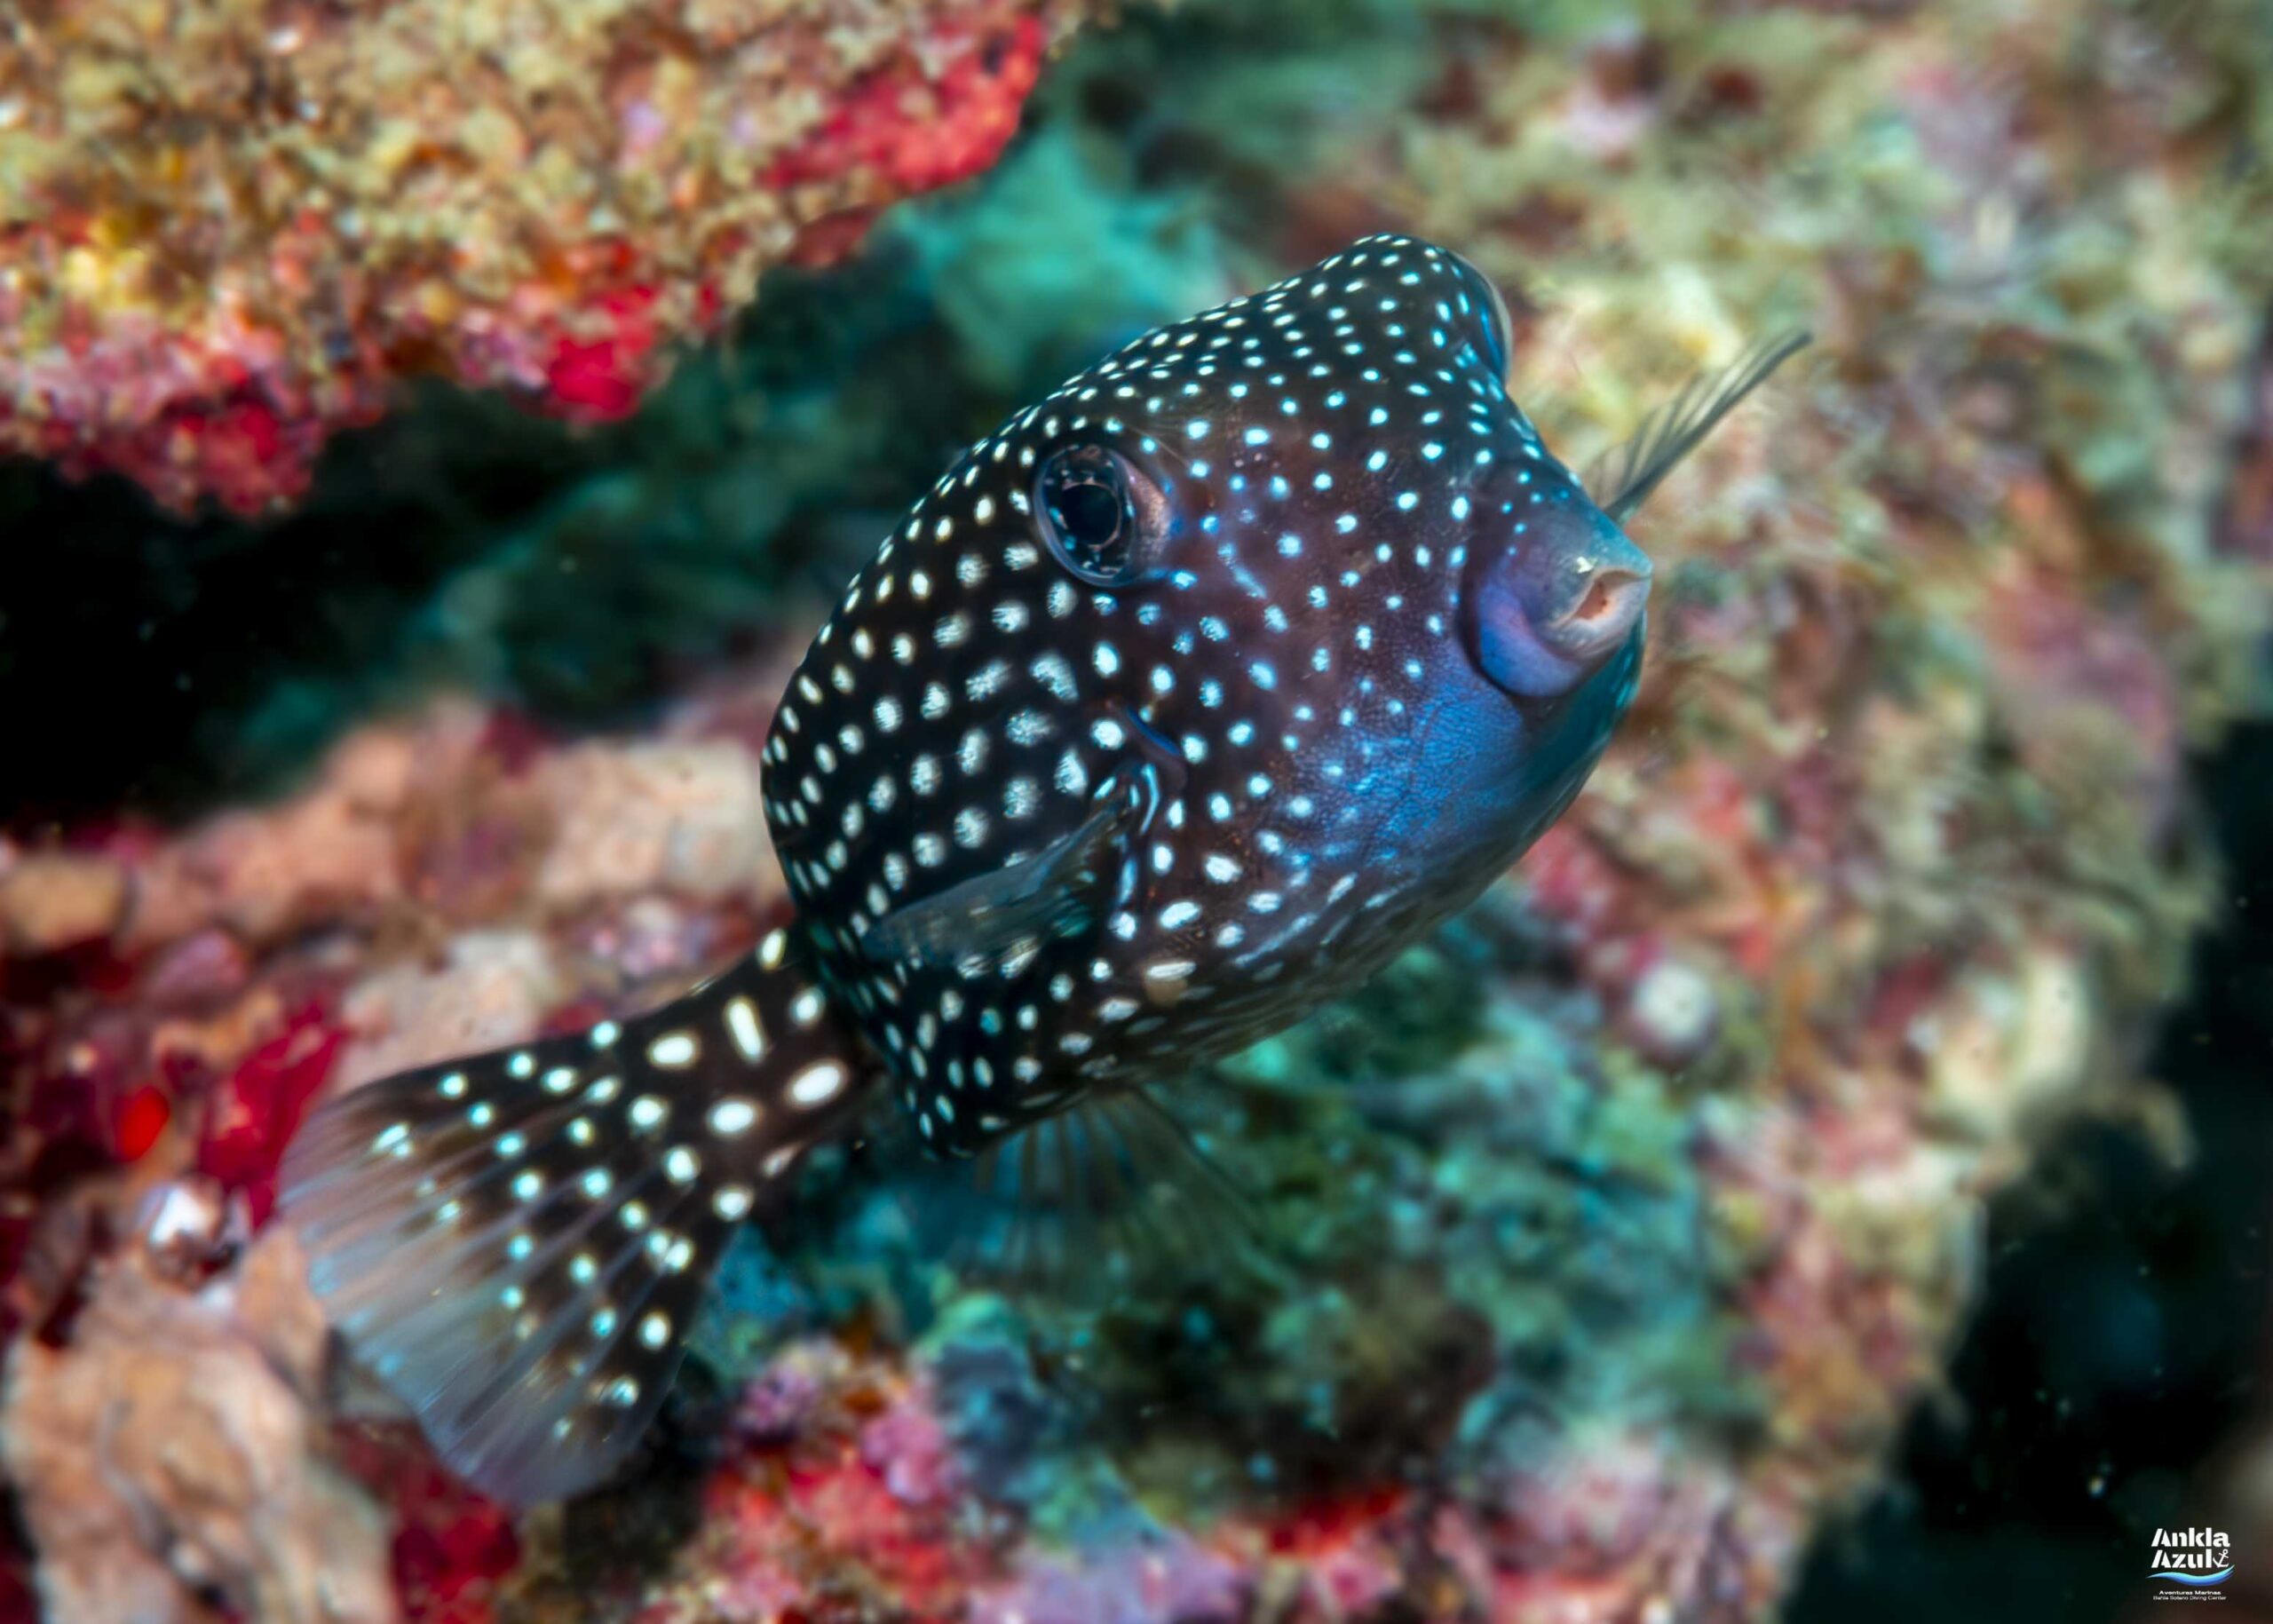 photo 2 Spotted boxfish | Ankla Azul